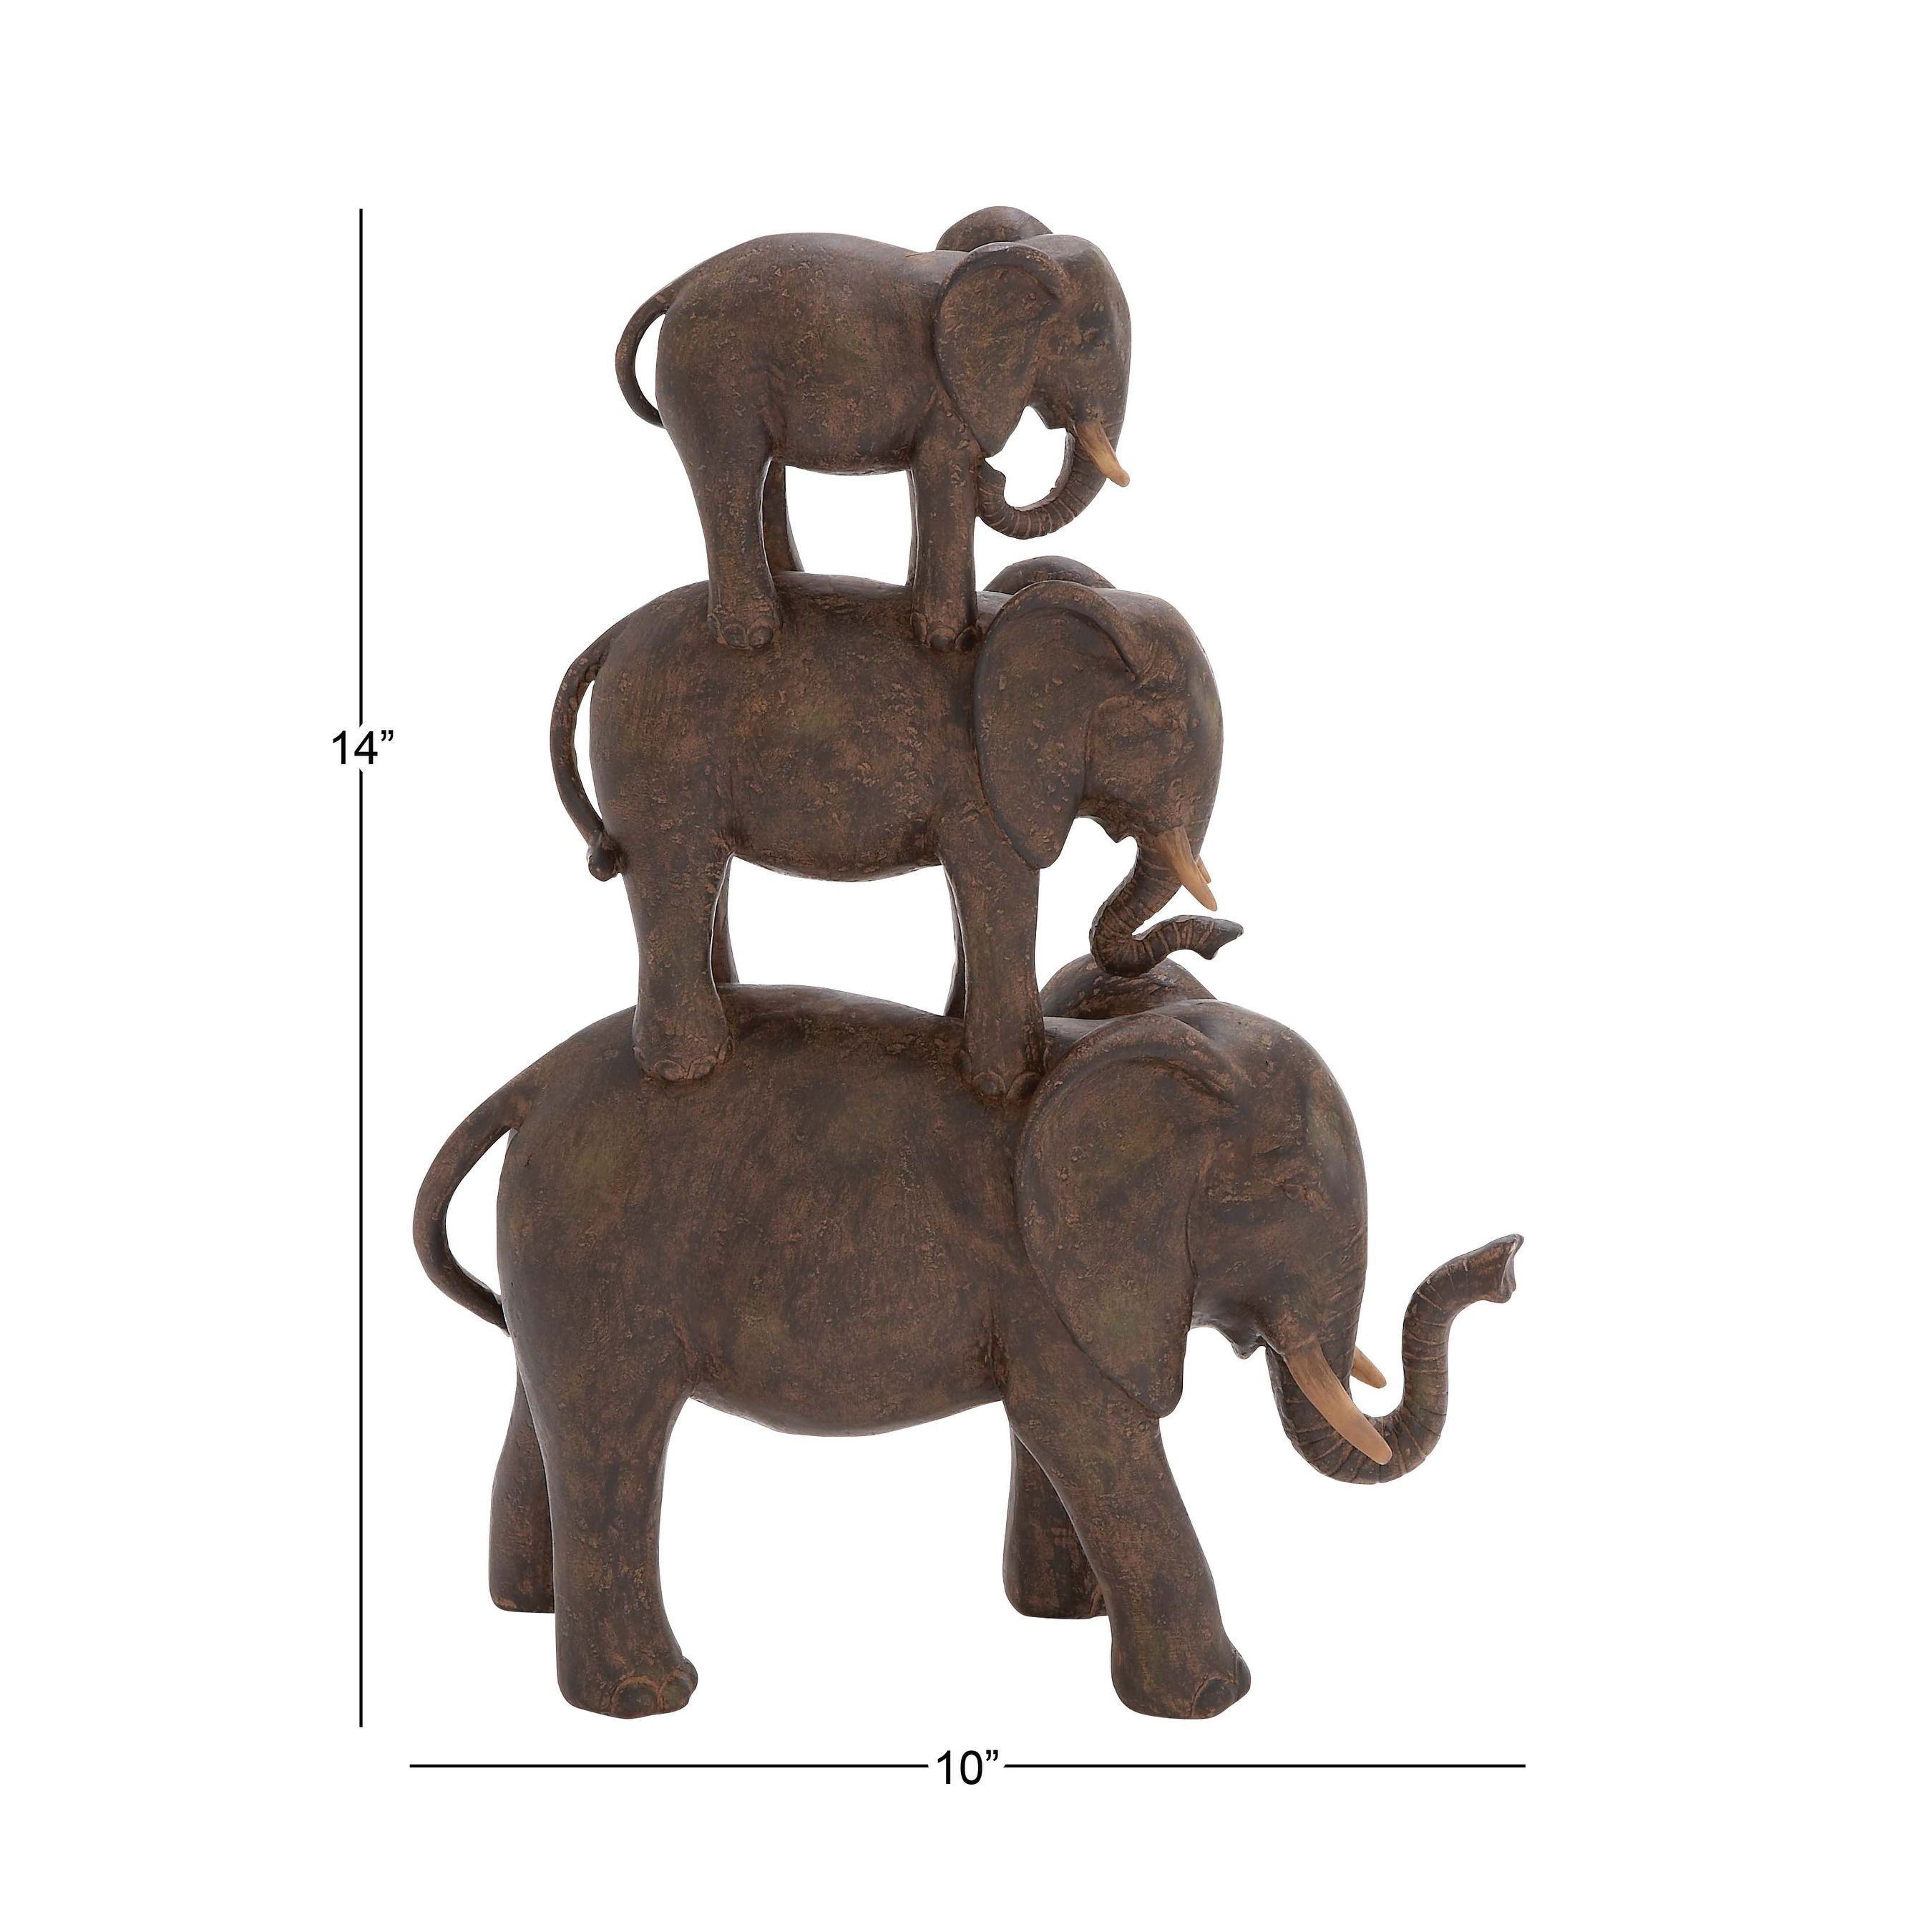 Brown Polystone Elephant Sculpture - 10 x 3 x 4